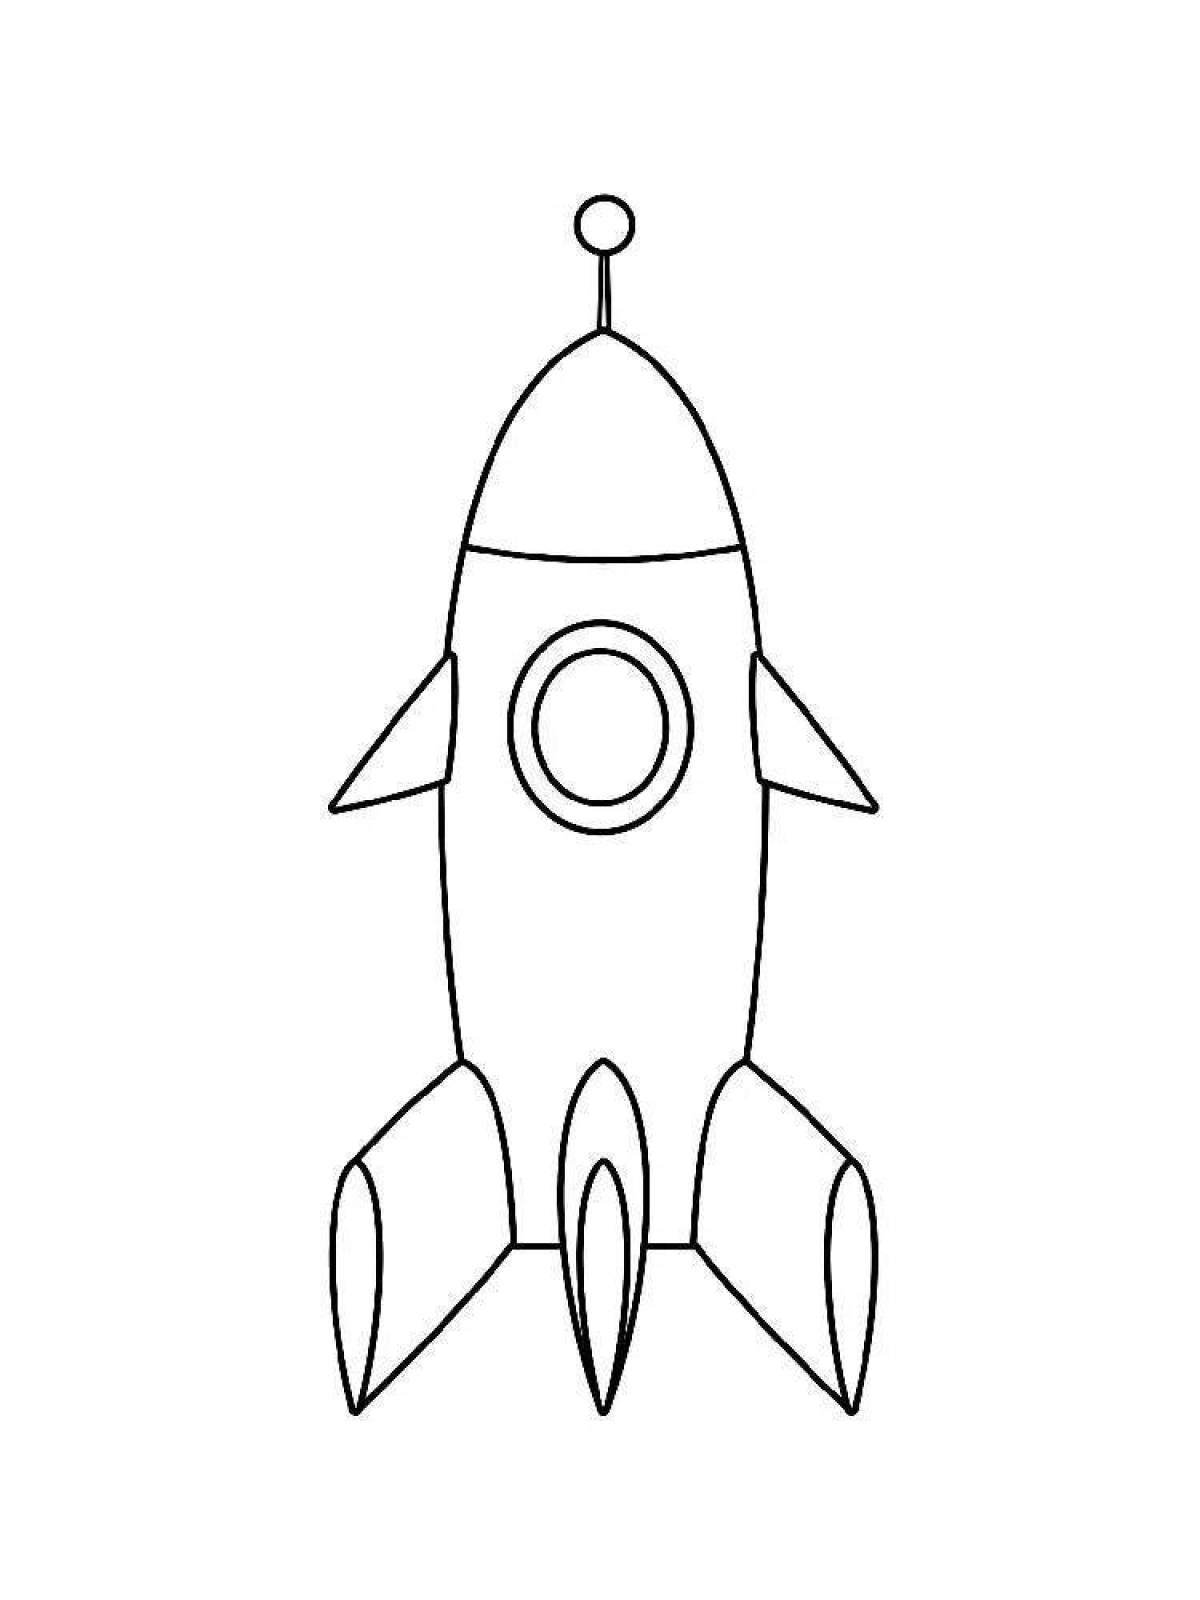 Coloring page joyful rocket